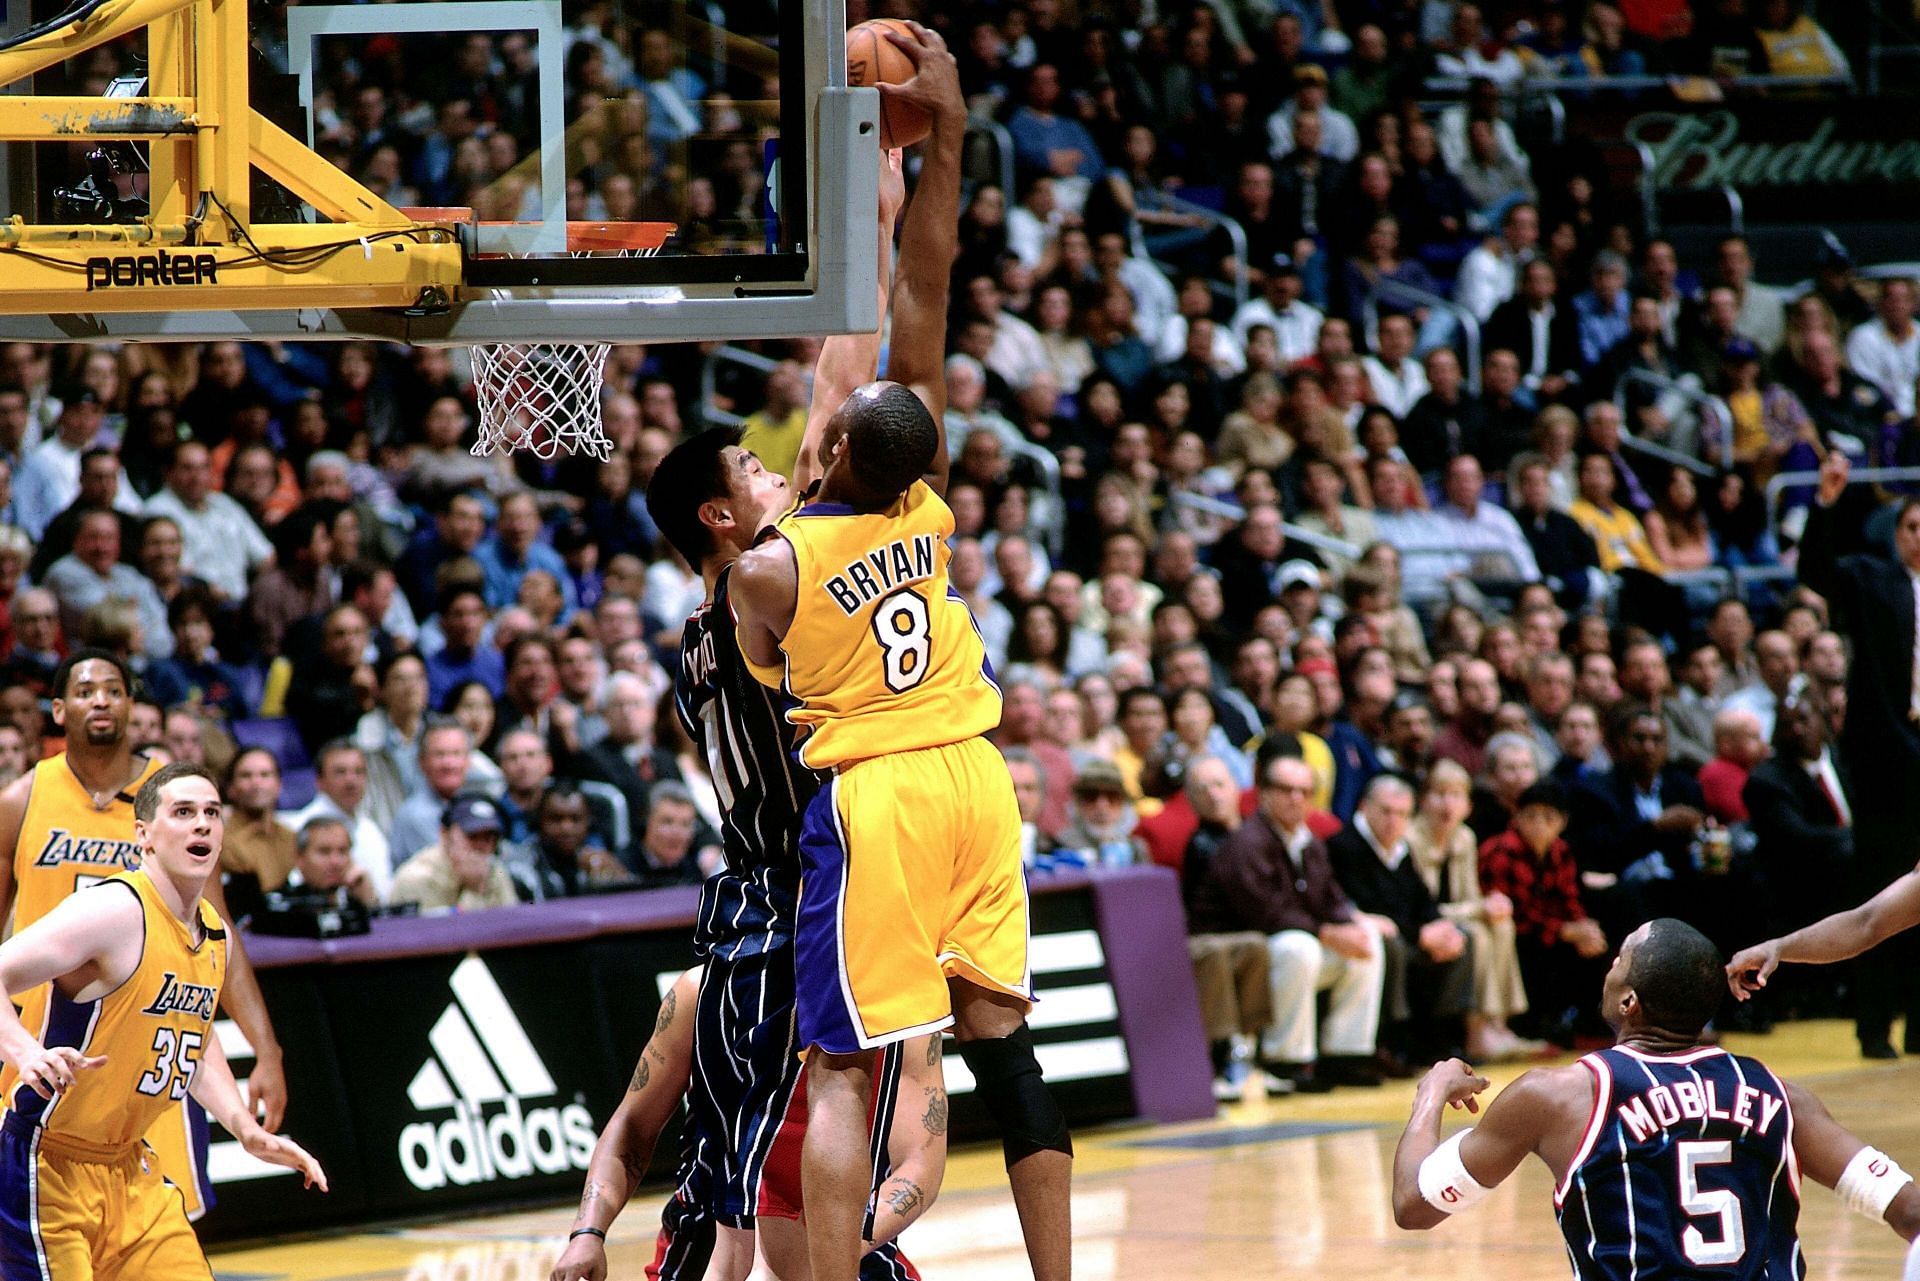 Kobe dunking on Yao Ming in 2003.